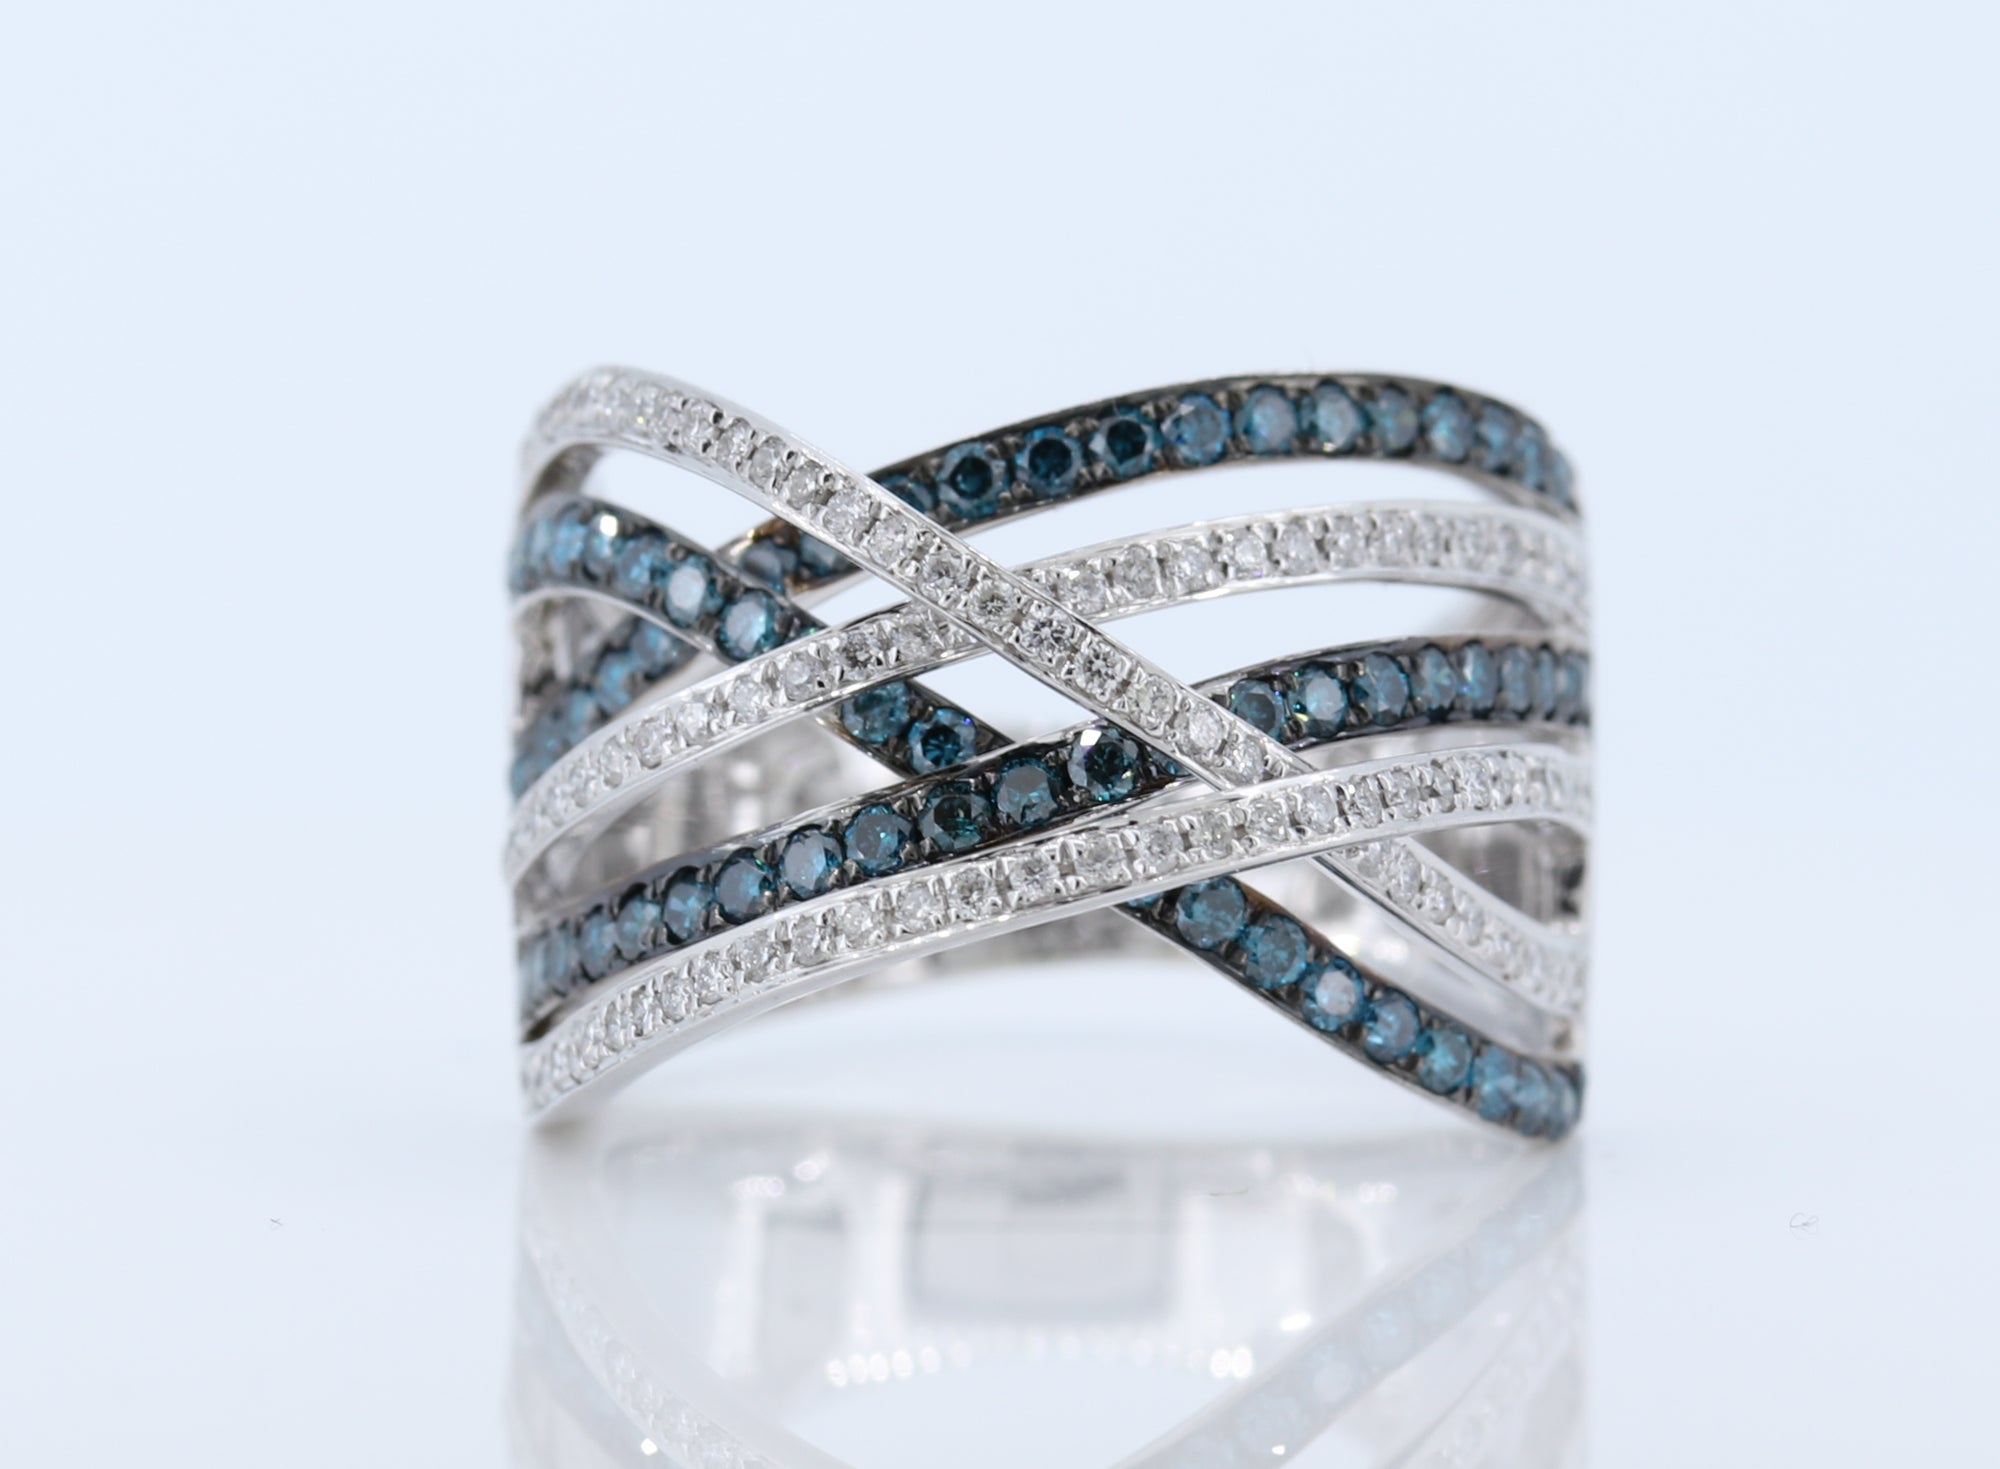 Stunning Blue and White Diamond Ring in 14K White Gold